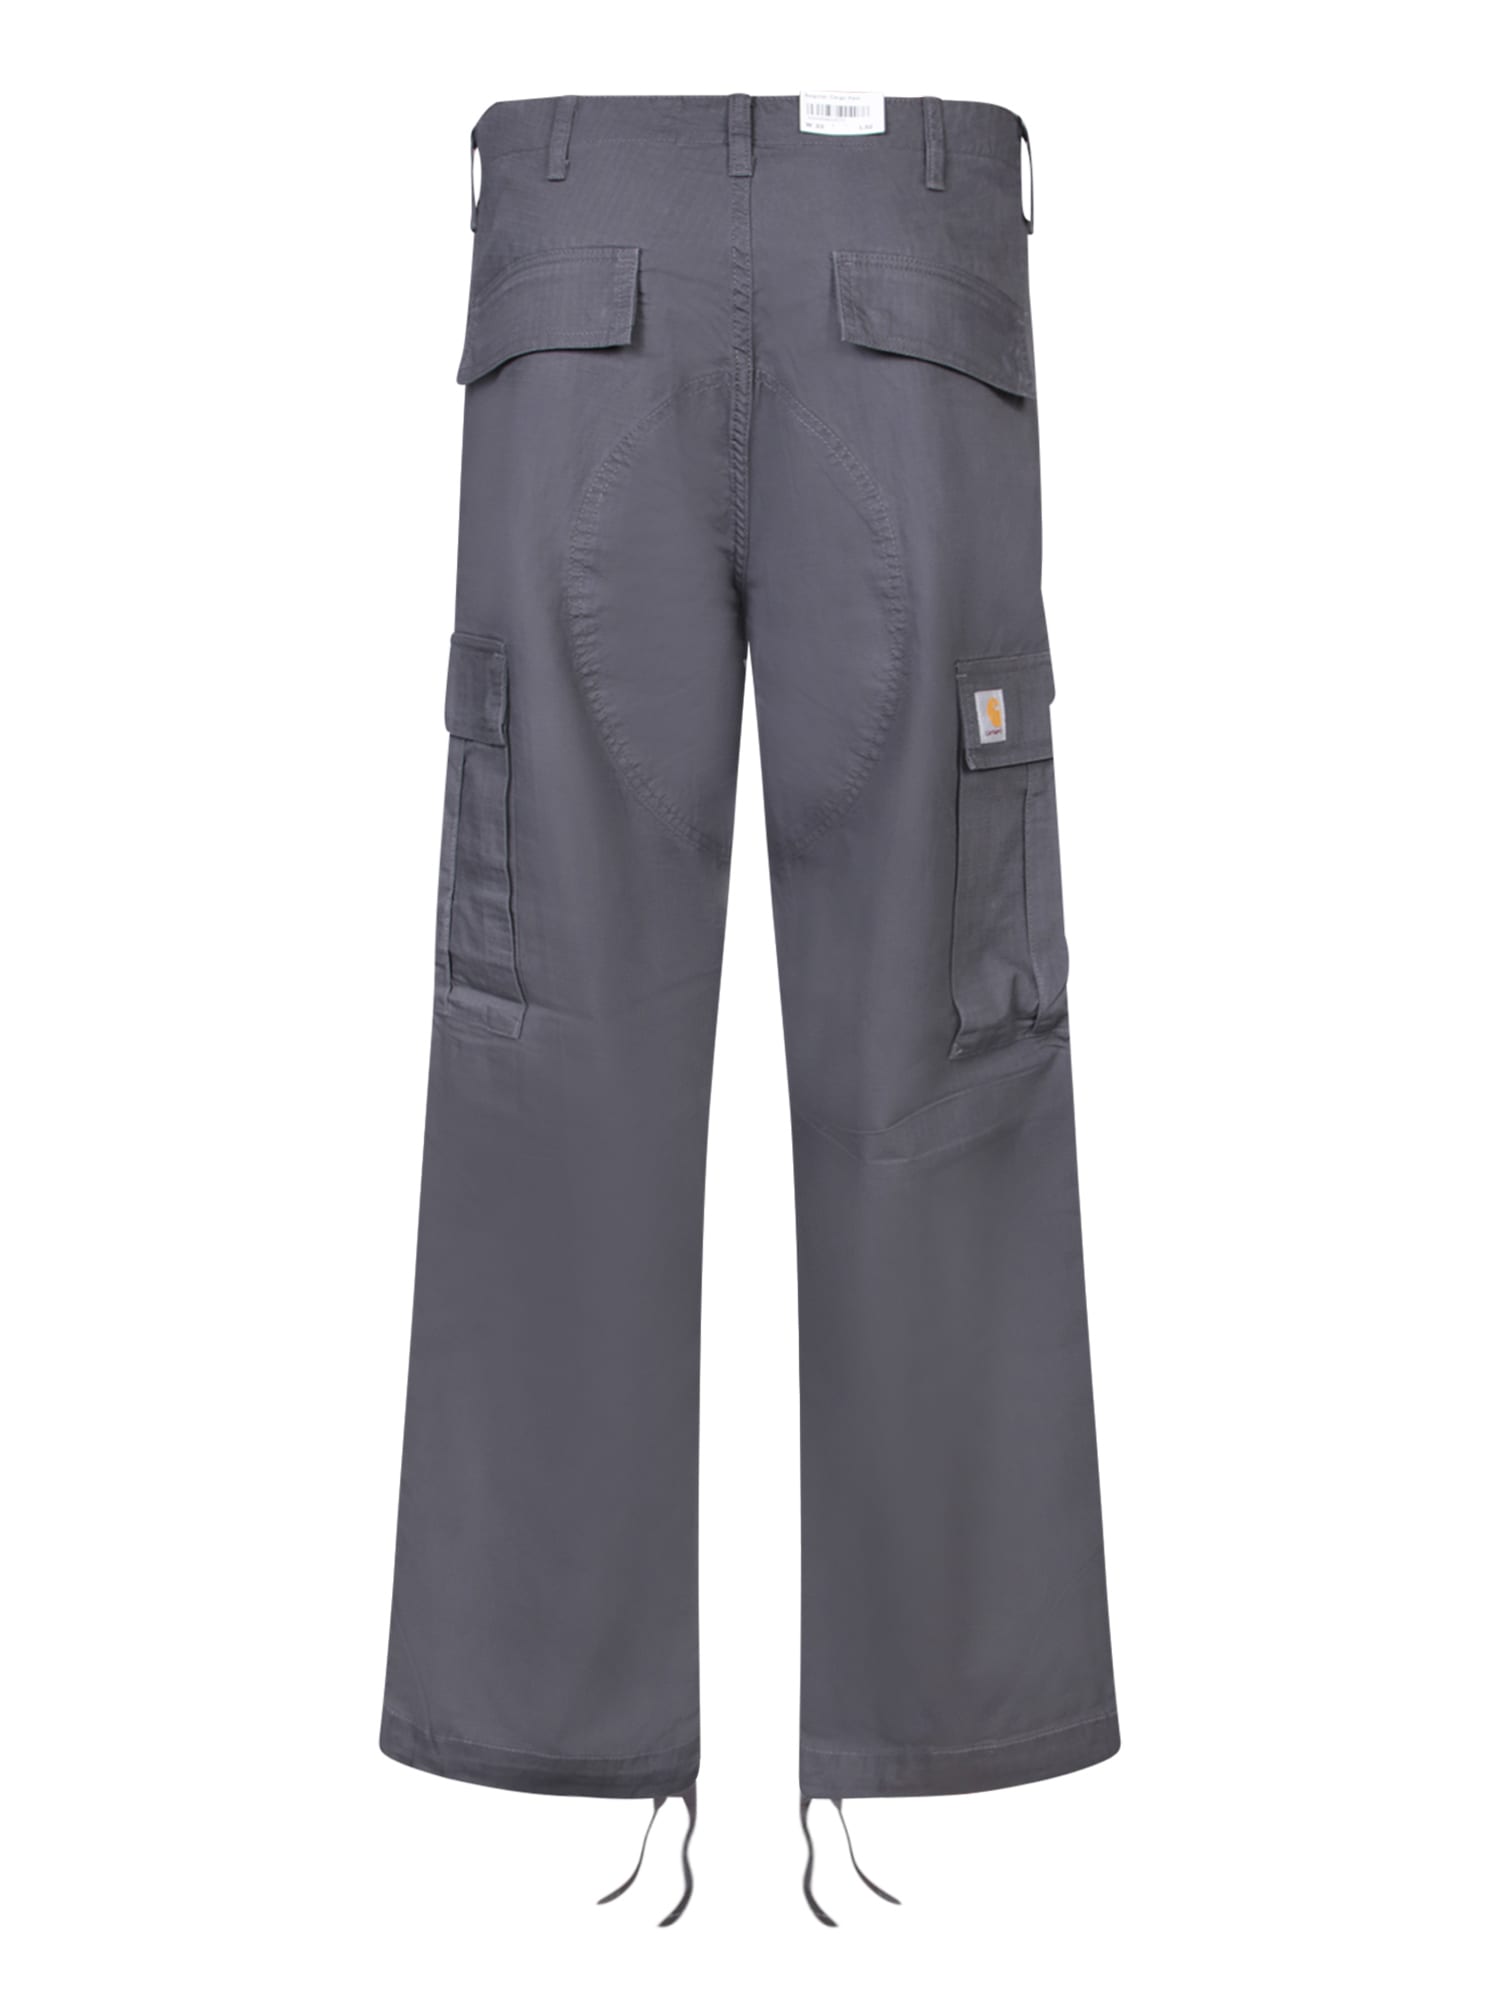 Shop Carhartt Columbia Grey Cargo Pants